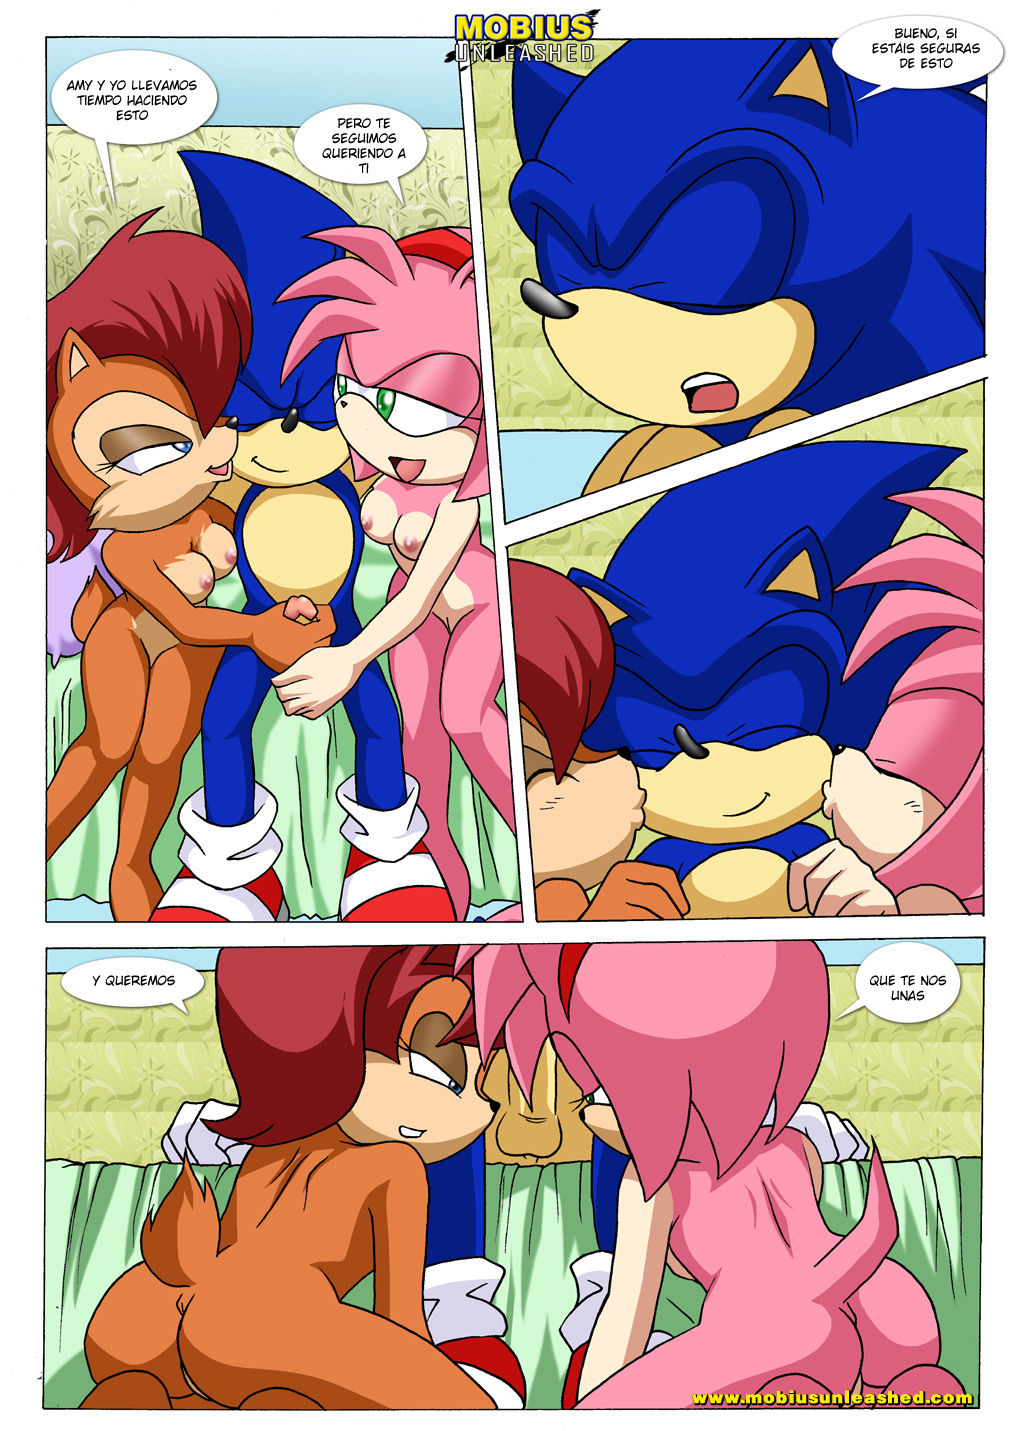 Divertida Noche de Sábado #1 (Saga Completa de Sonic, Sally, Amy, Tails, Knuckles) - 11 - Comics Porno - Hentai Manga - Cartoon XXX